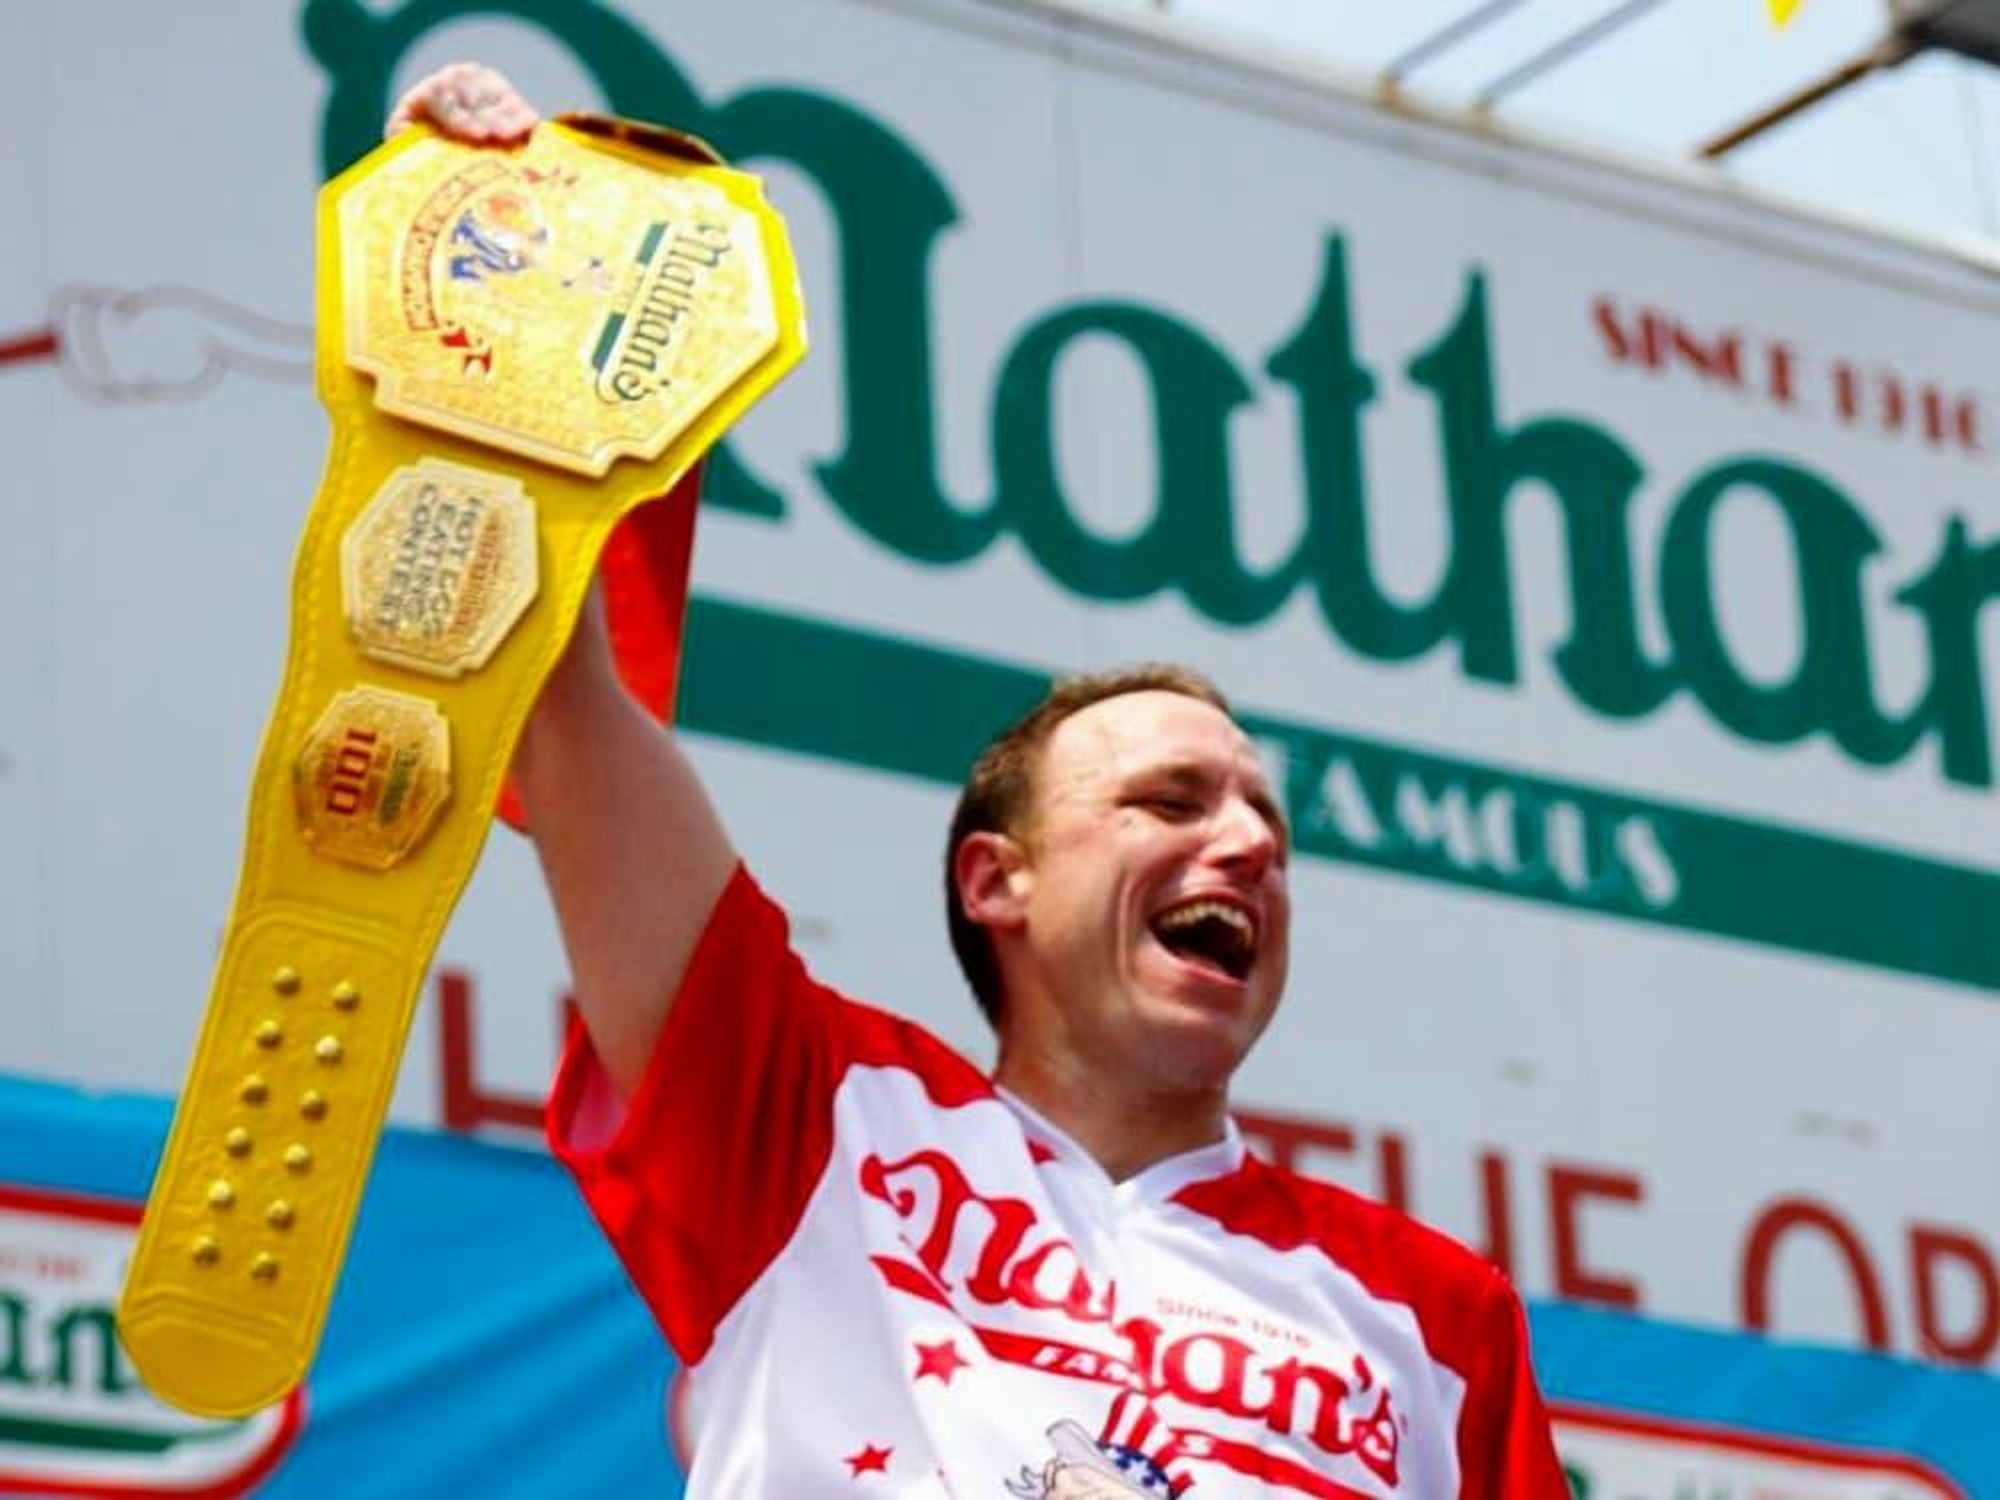 Joey Chestnut world champion mustard belt